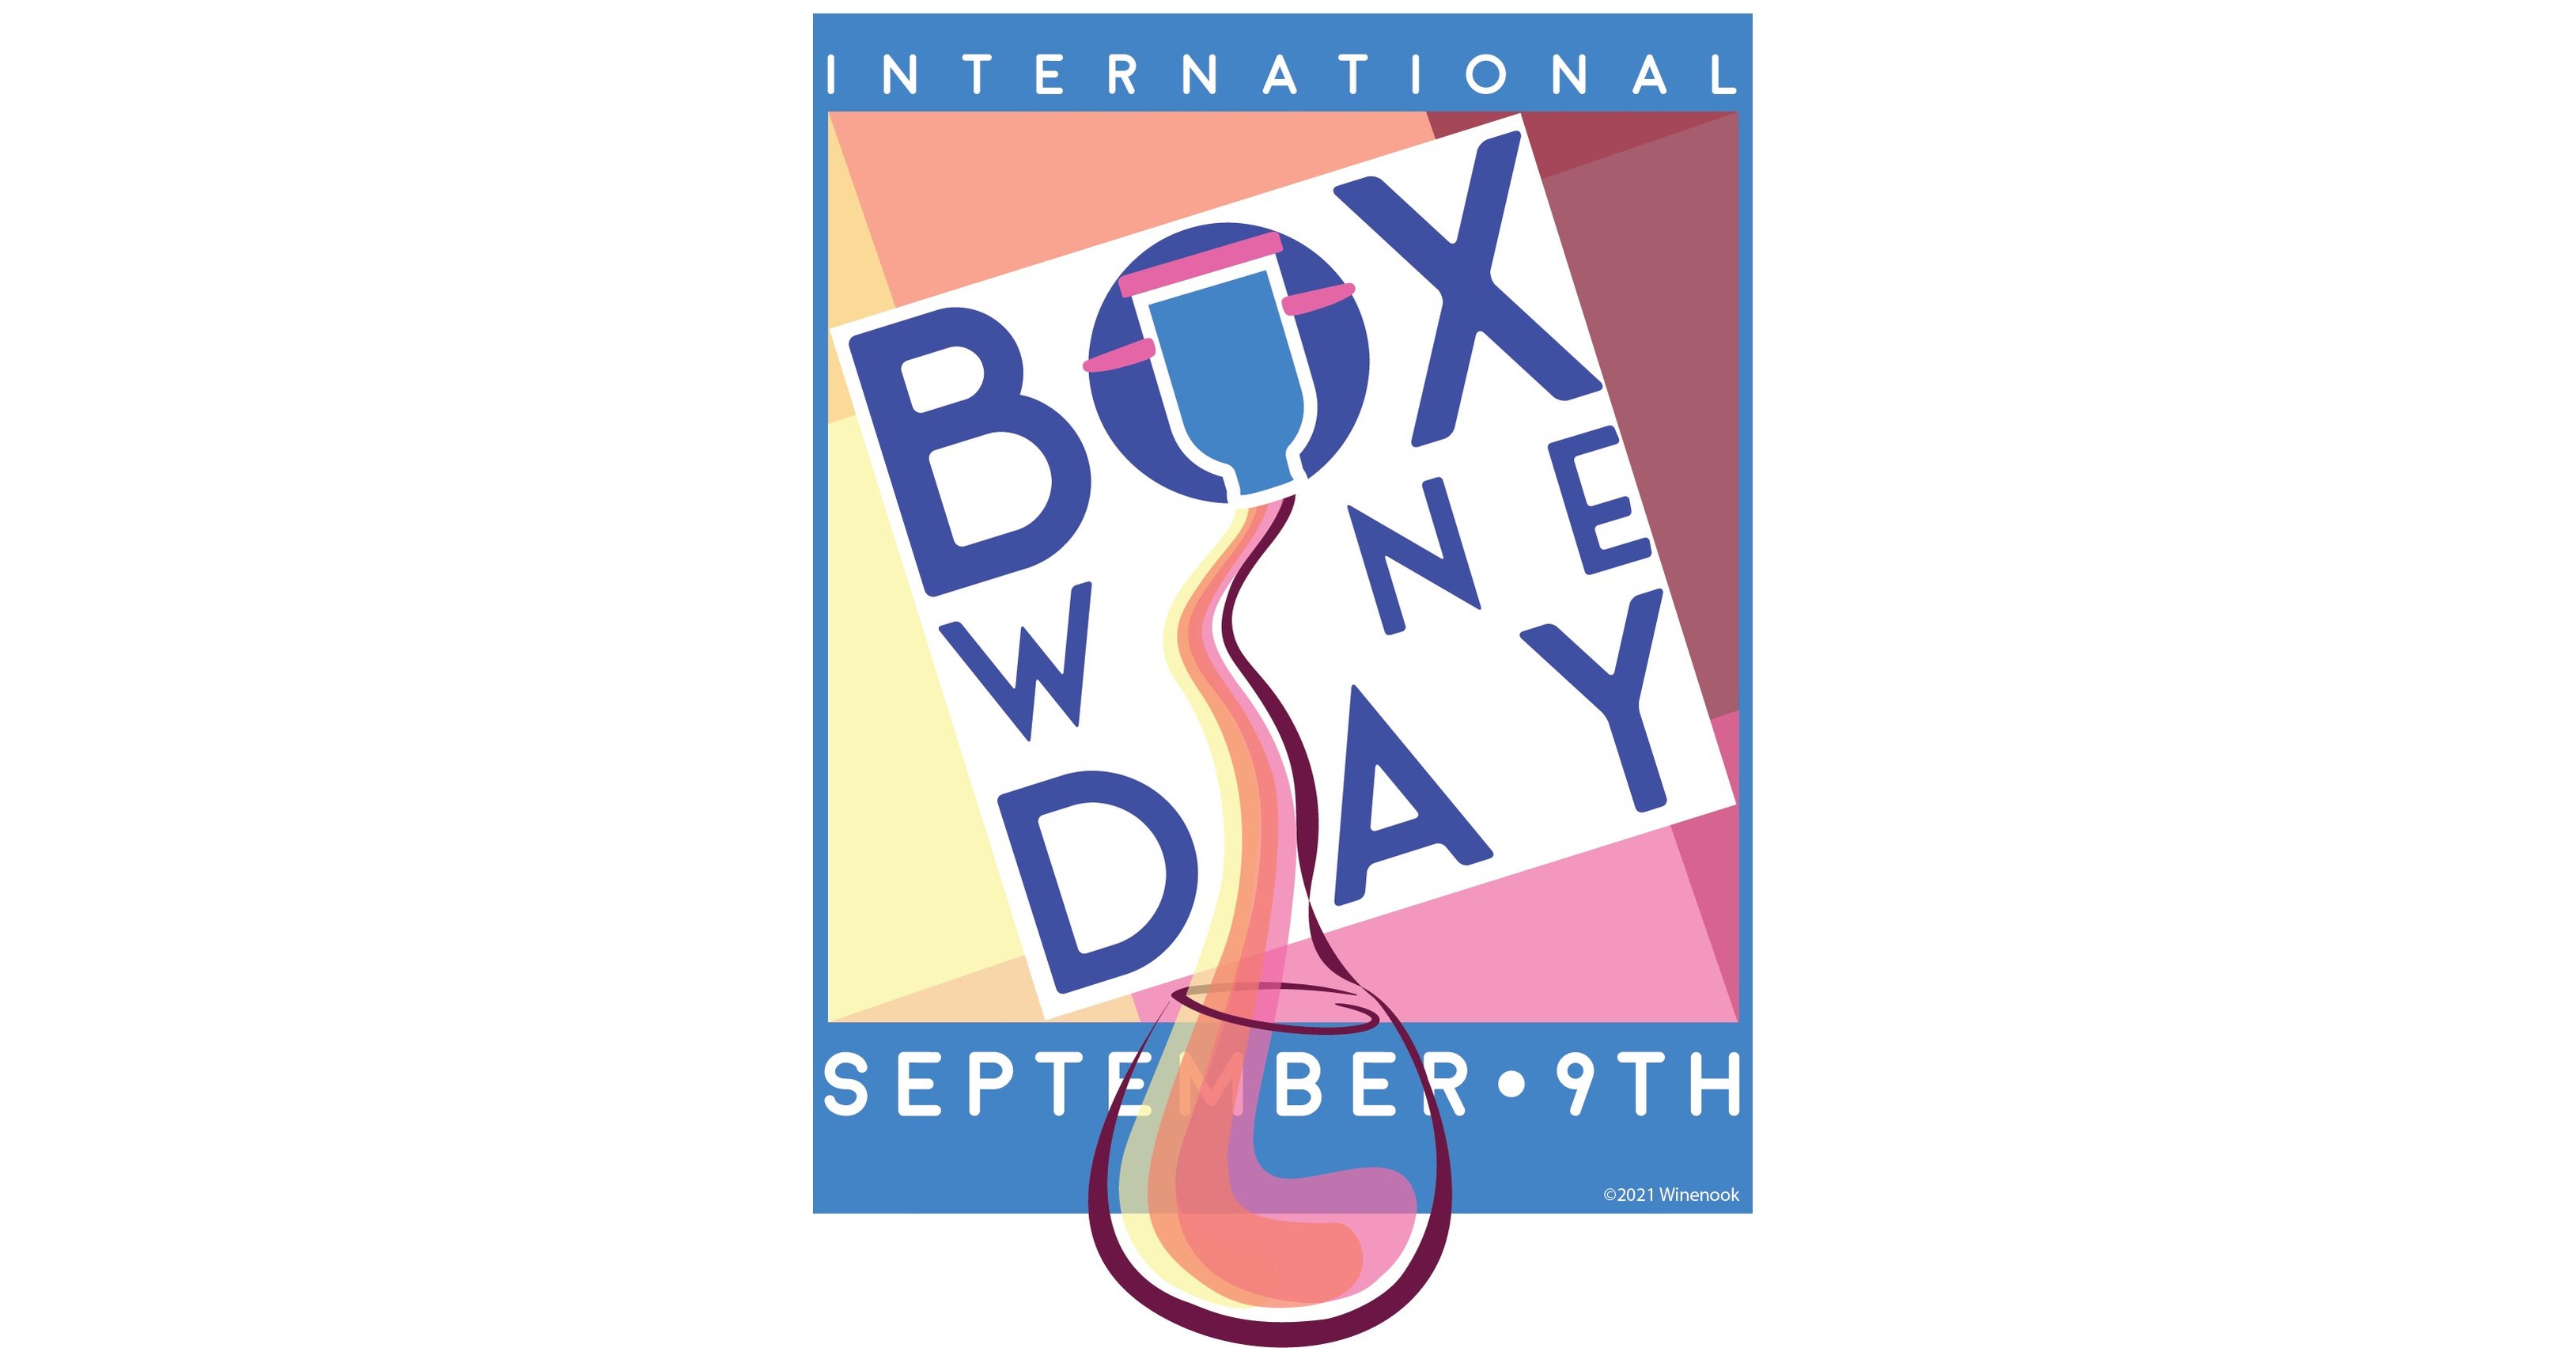 International Box Wine Day Is September 9 9881